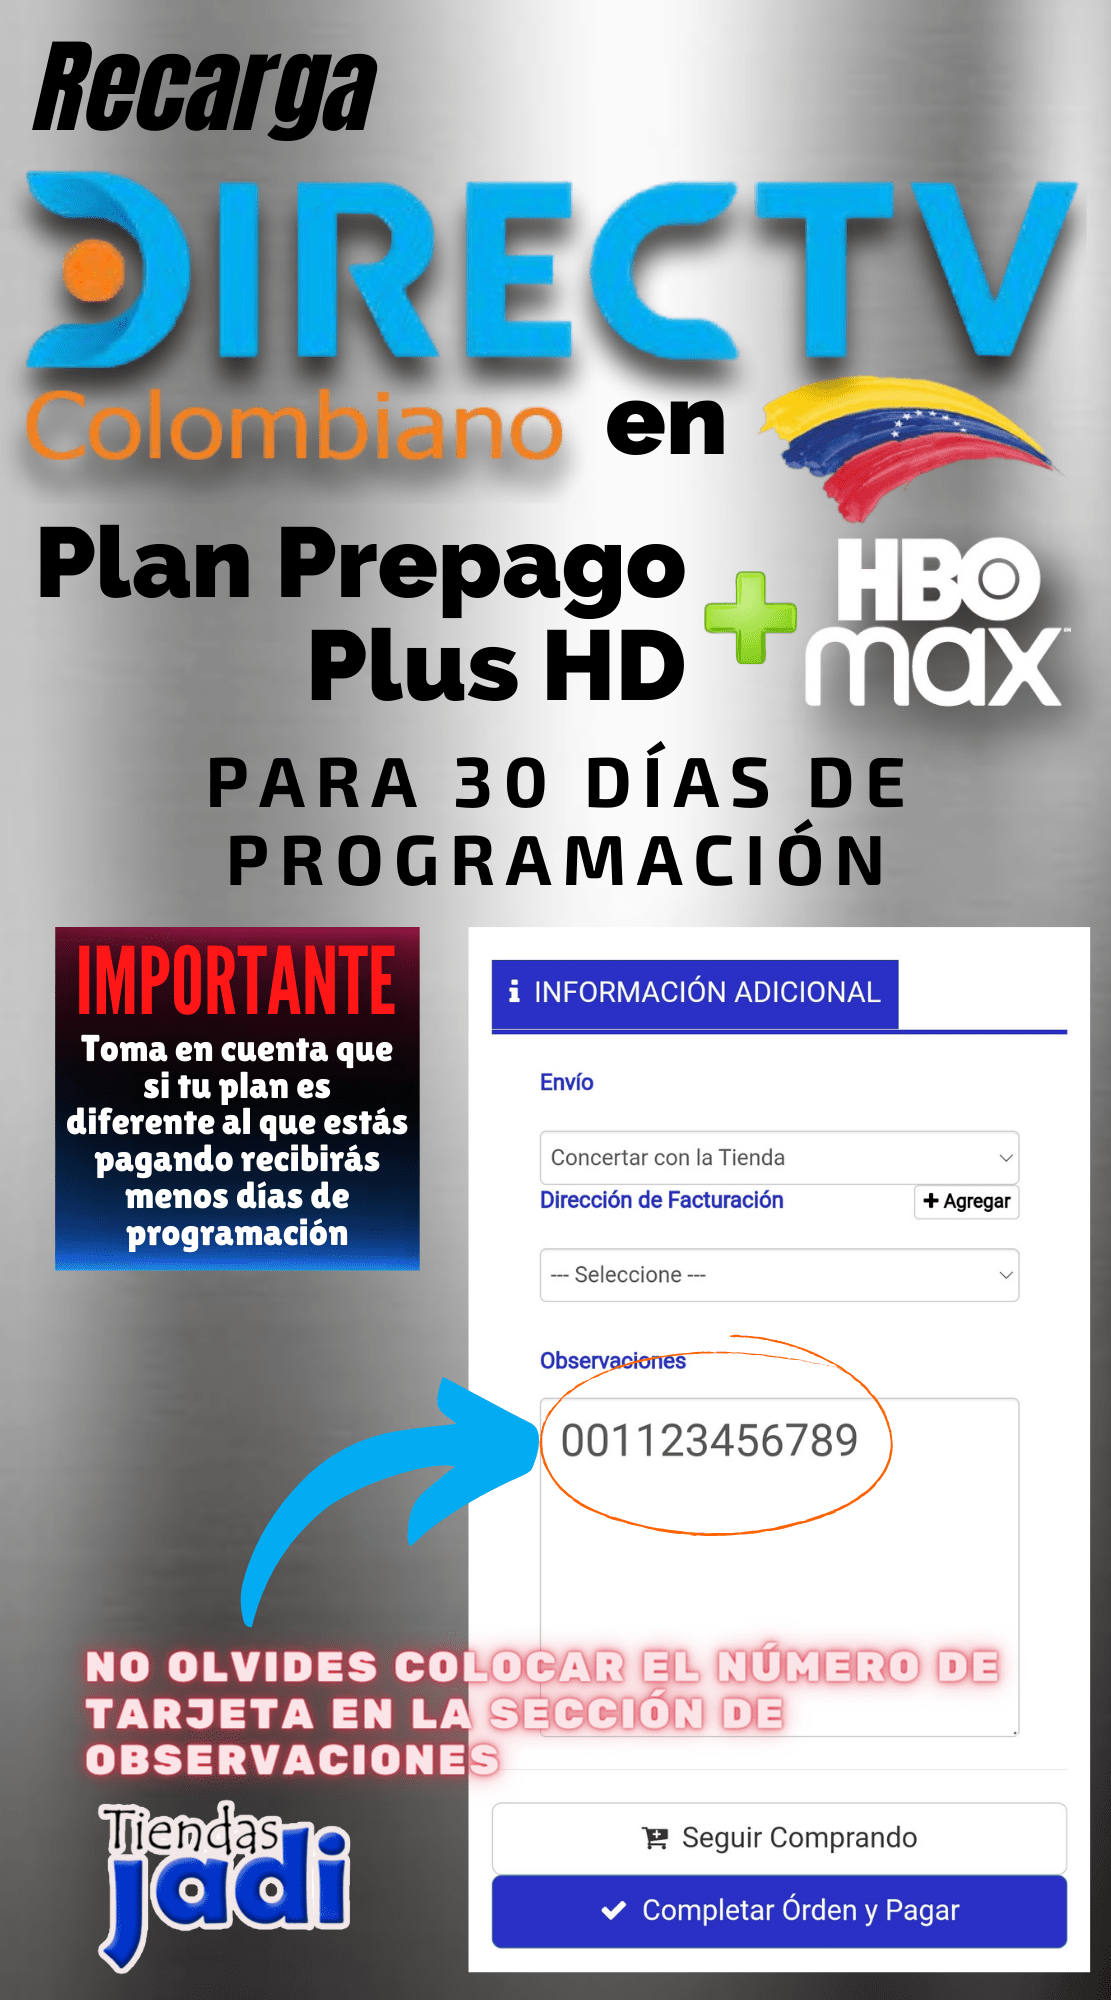 Recarga Plan Básico Directv Colombiano + HBOMAX 30 Dias de Programación